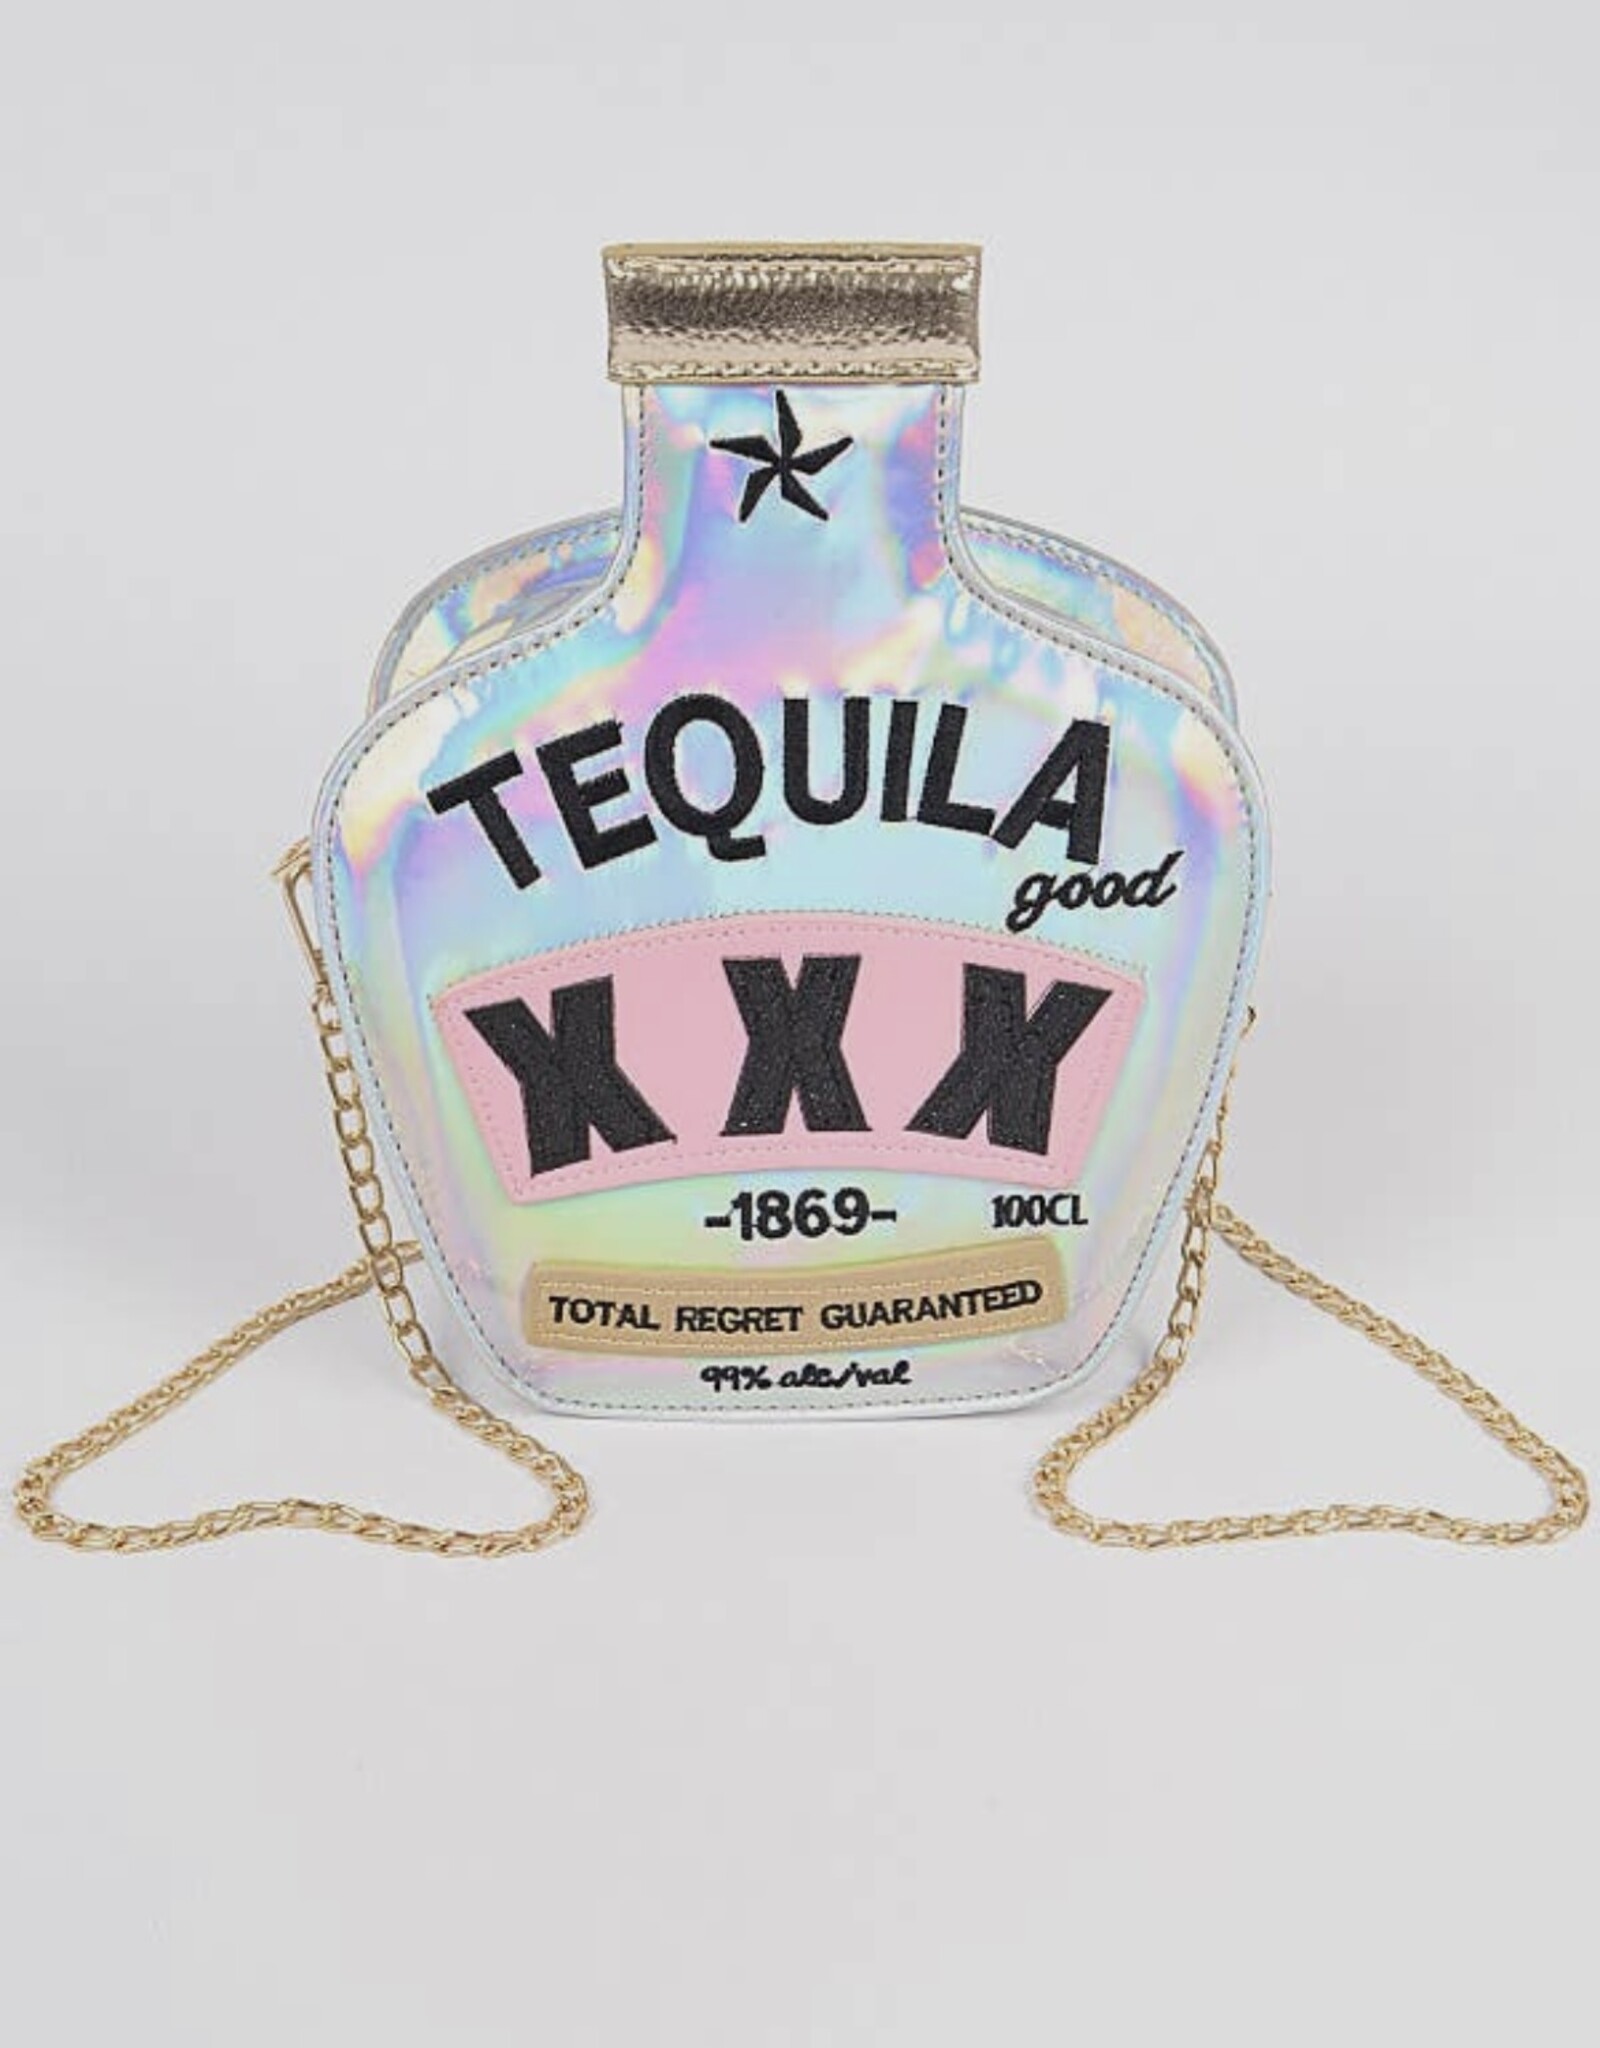 Tequila Crossbody Silver